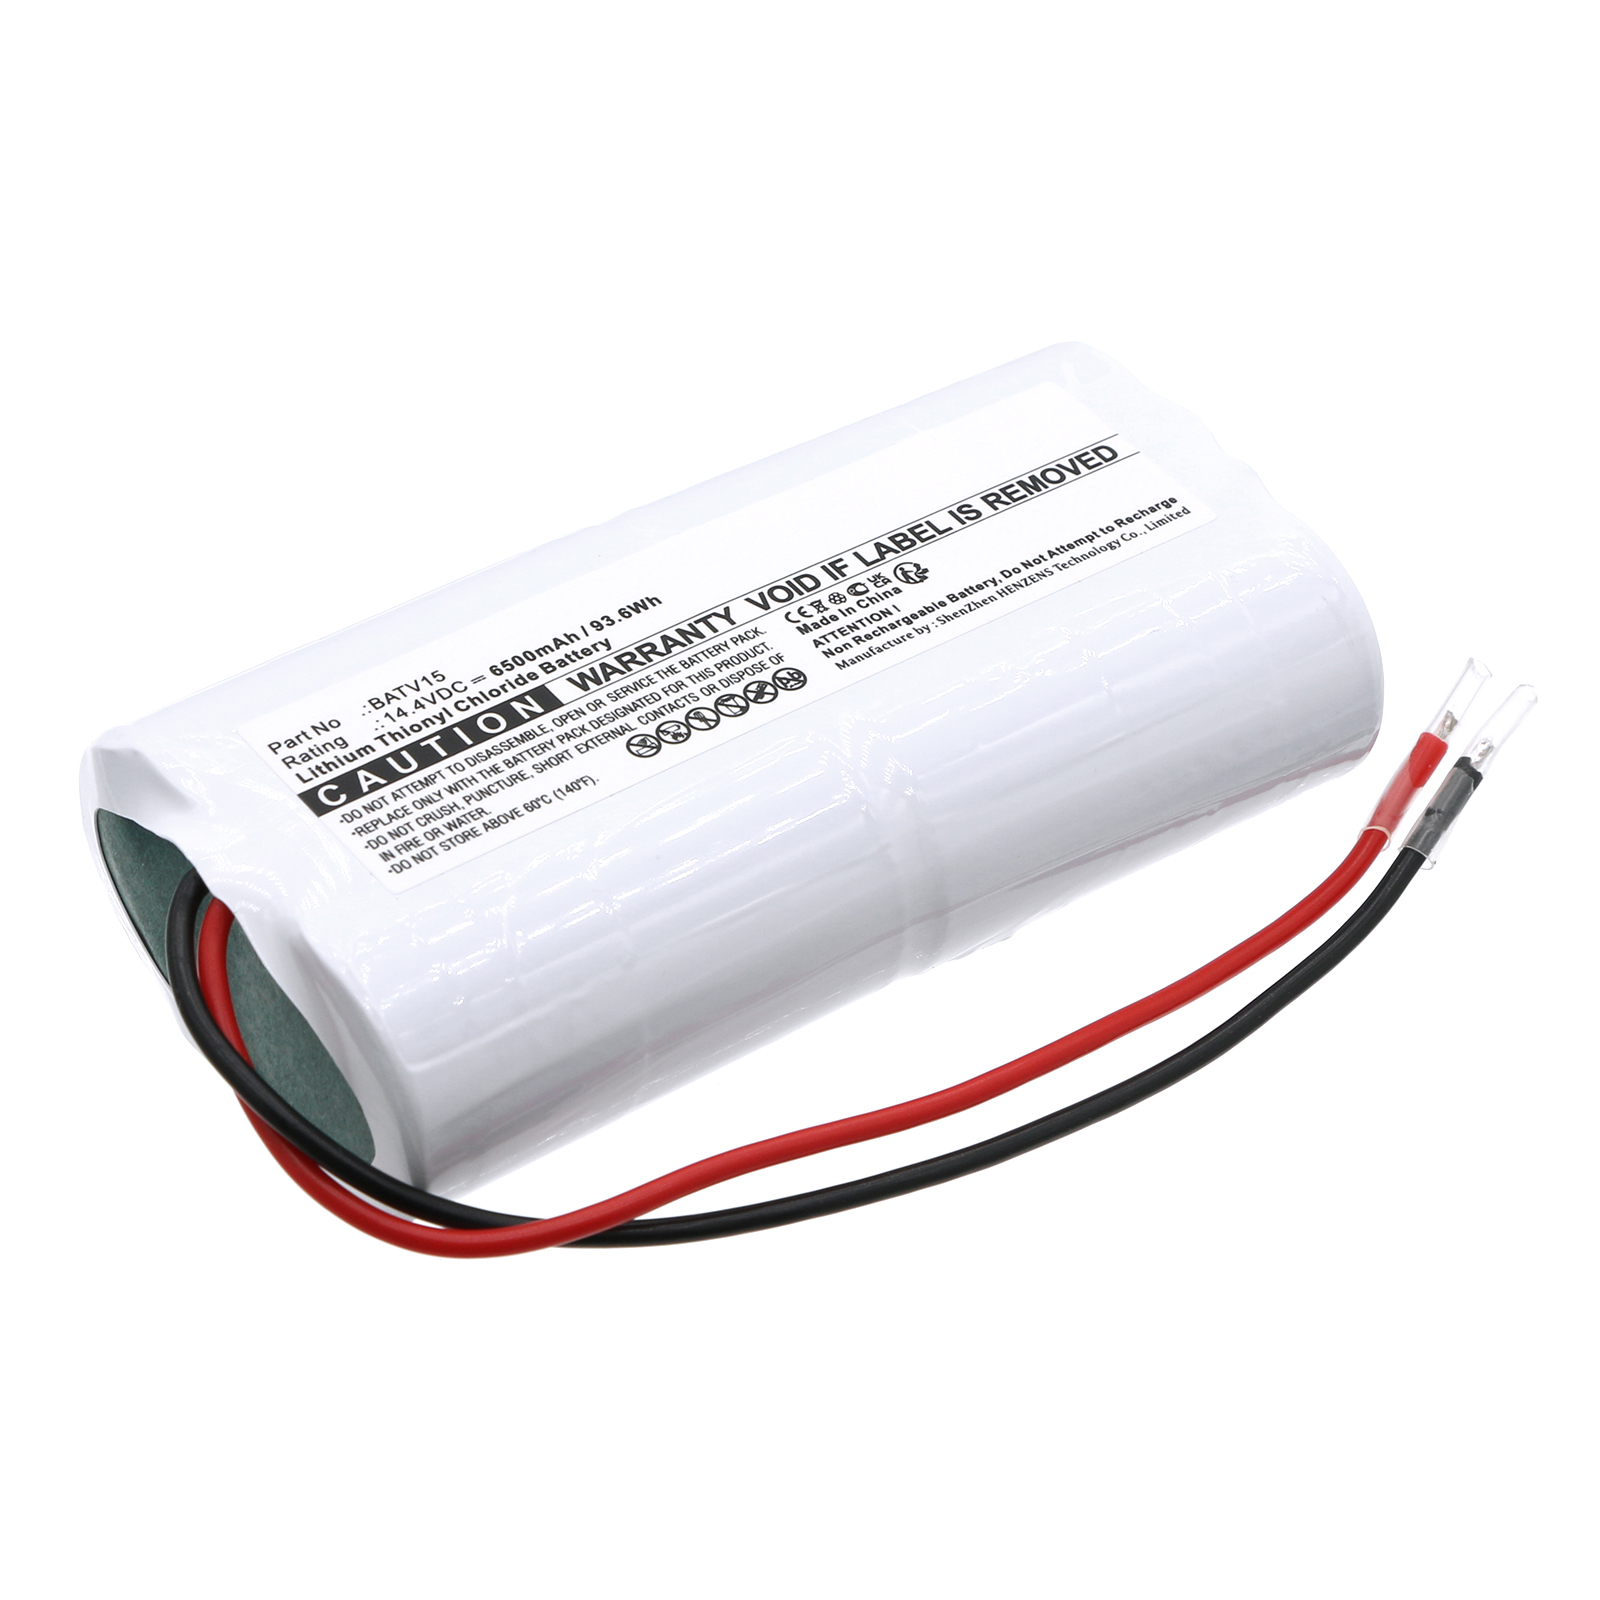 Synergy Digital Alarm System Battery, Compatible with DAITEM BATV15 Alarm System Battery (Li-SOCl2, 14.4V, 6500mAh)